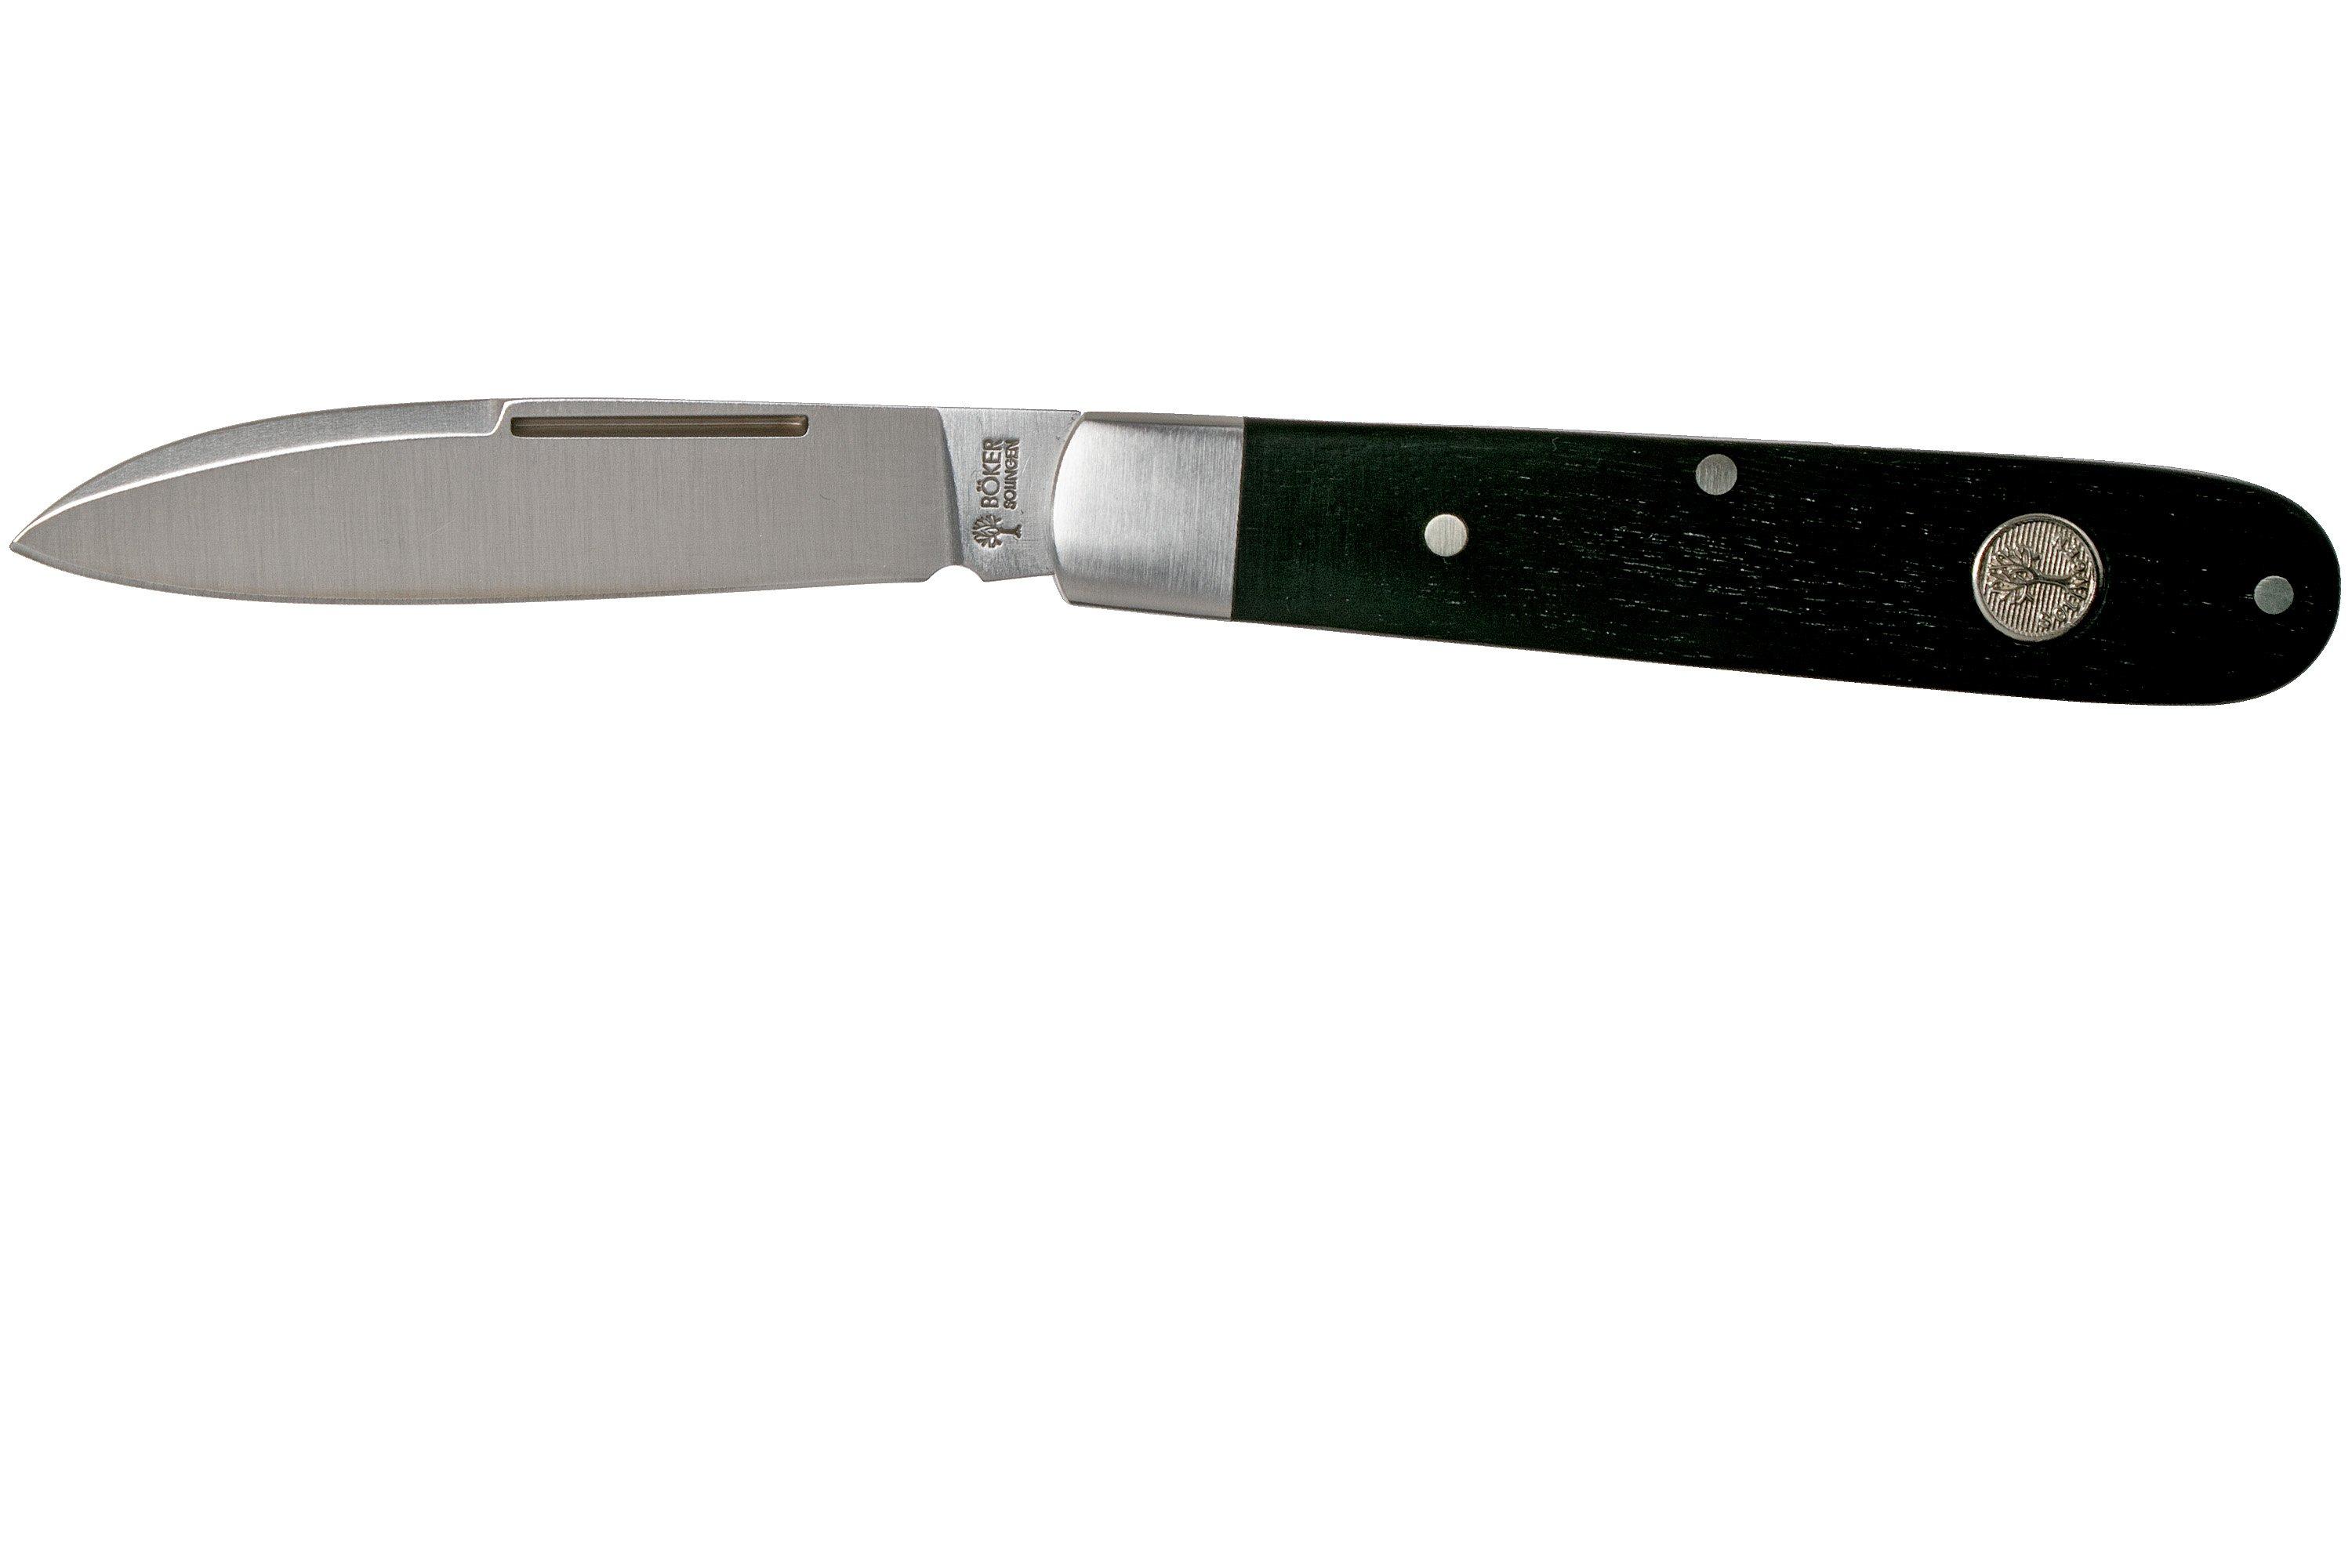 Böker Barlow Prime Hornbeam 110942 pocket knife | Advantageously ...